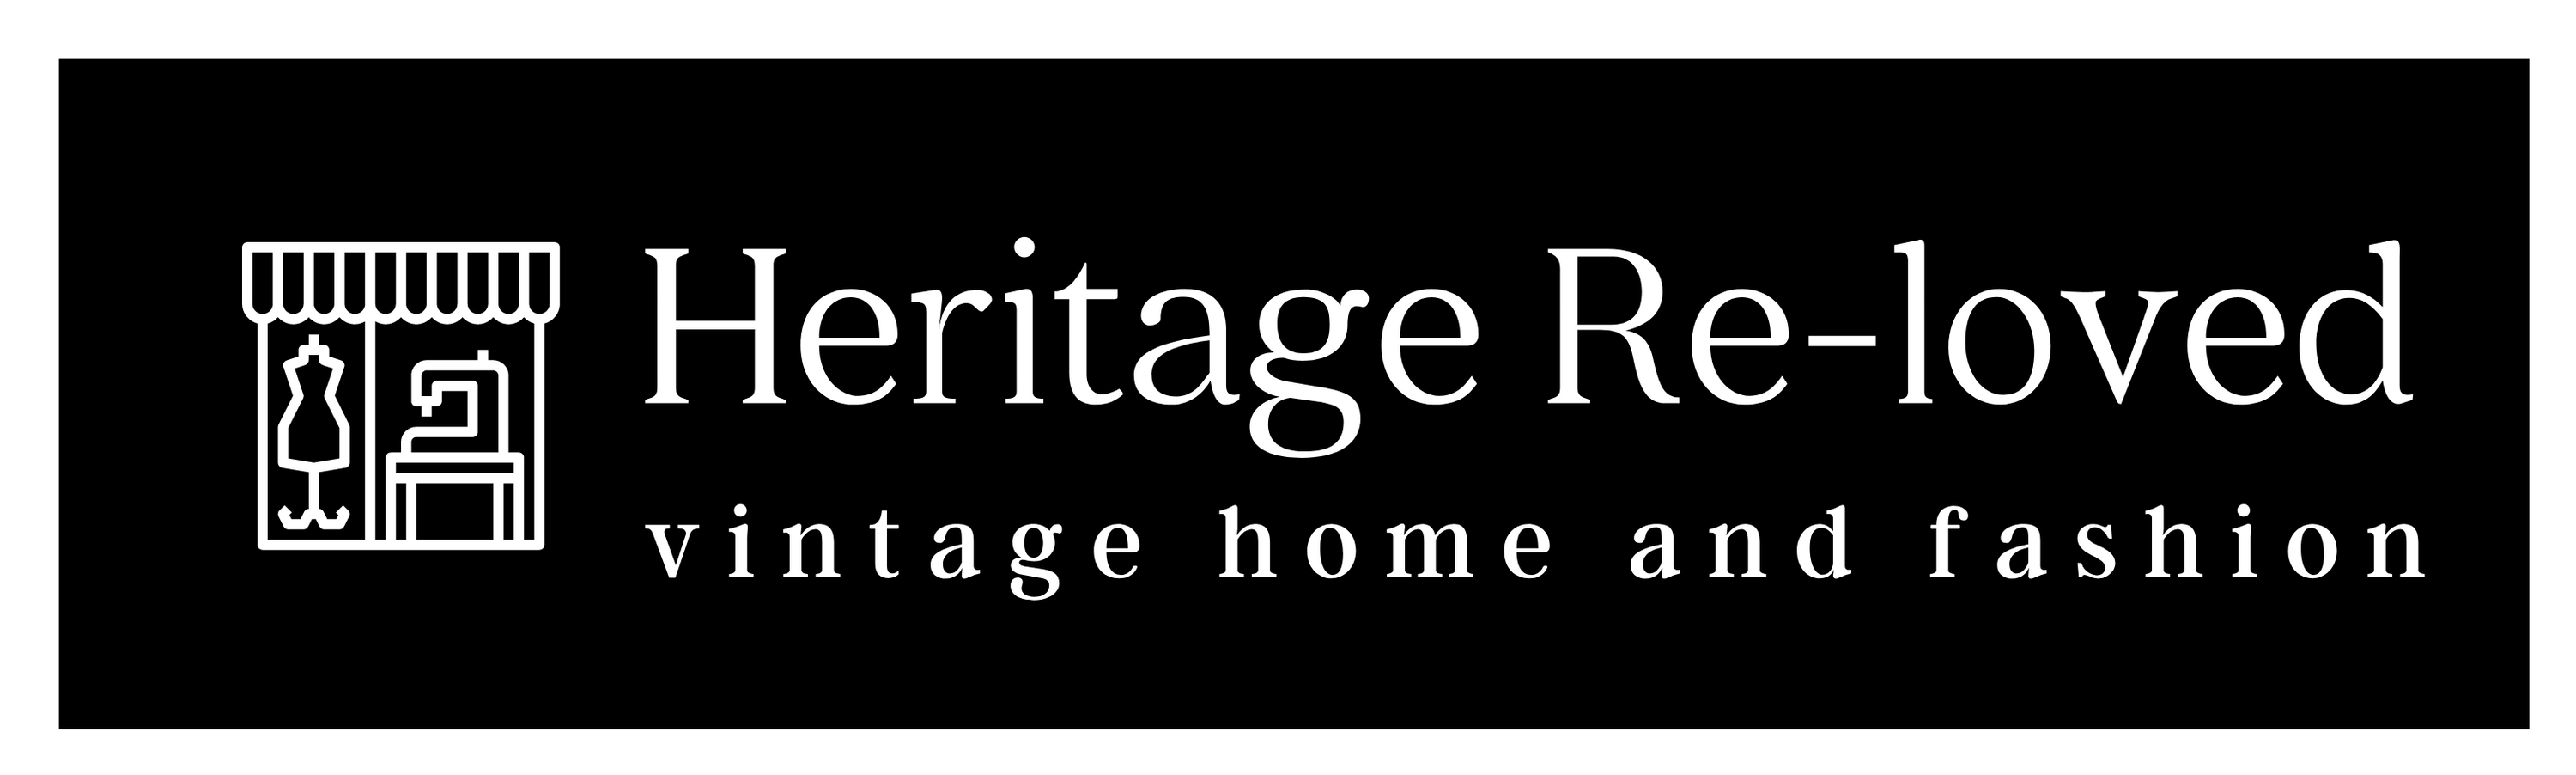 Heritage Re-loved